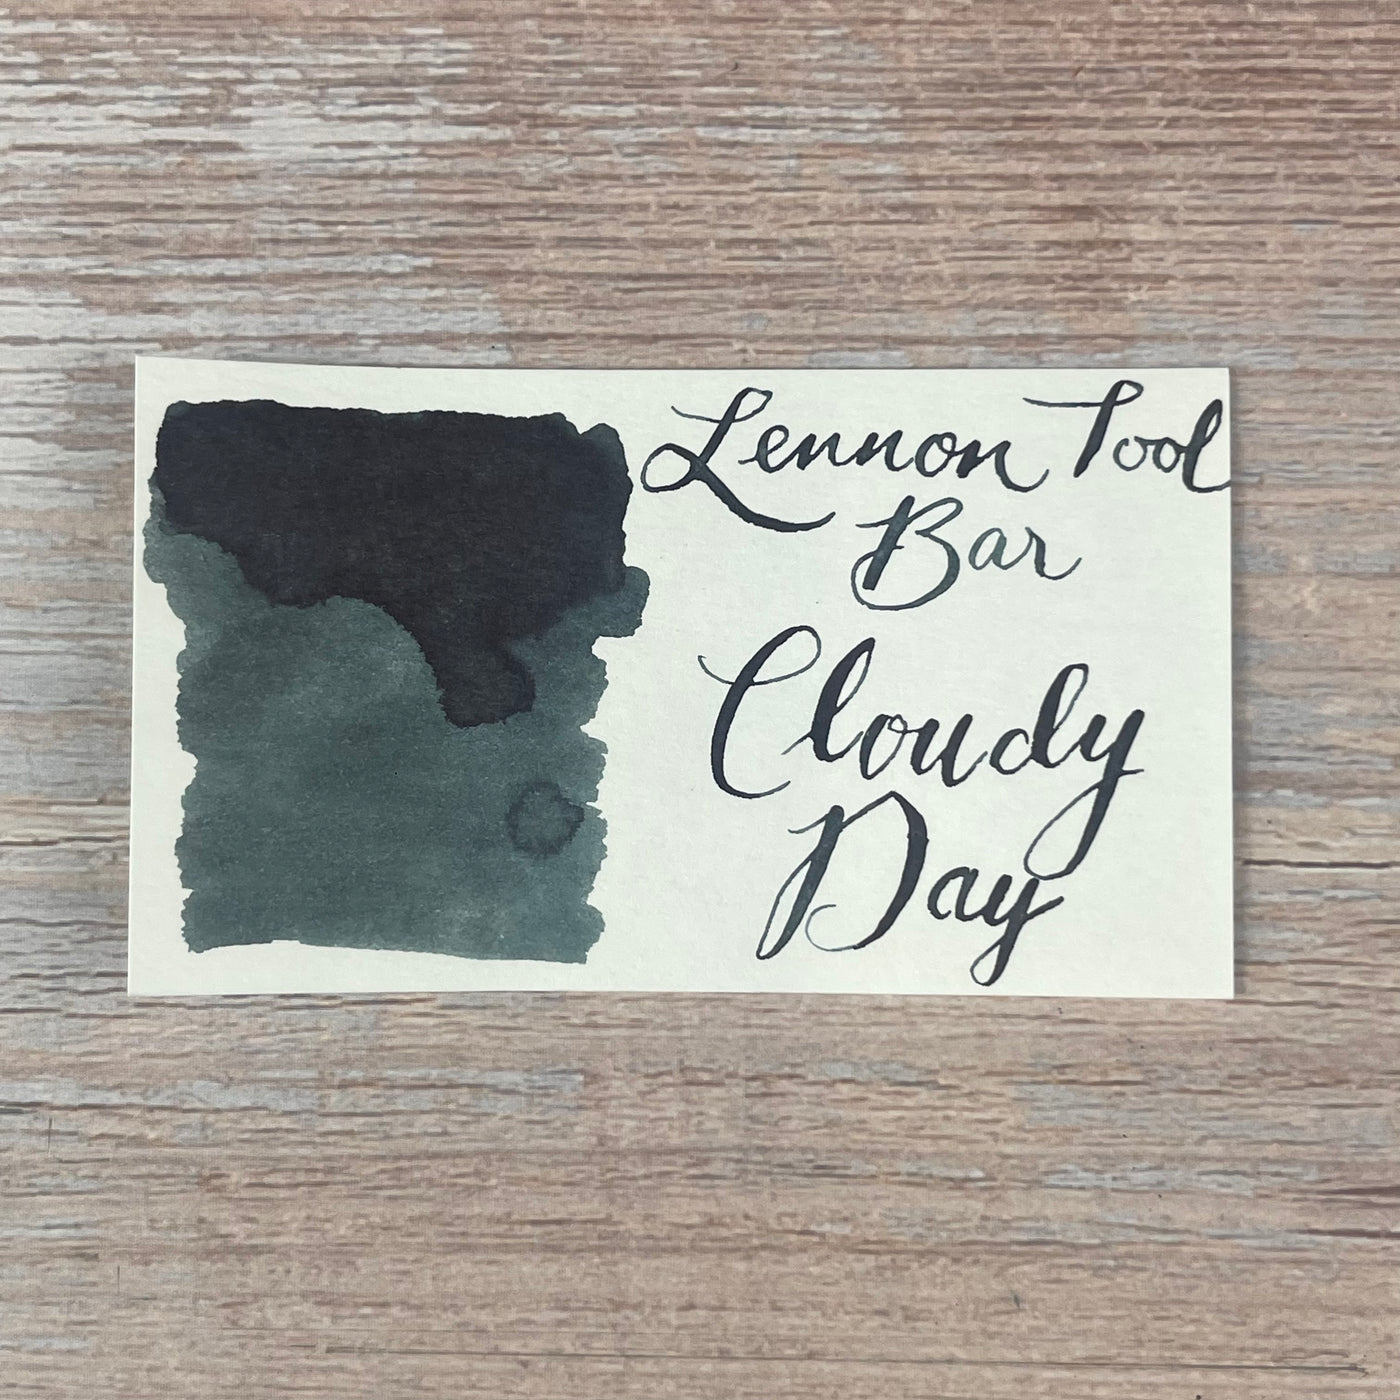 Lennon Tool Bar Cloudy Day - 30ml Bottled Ink